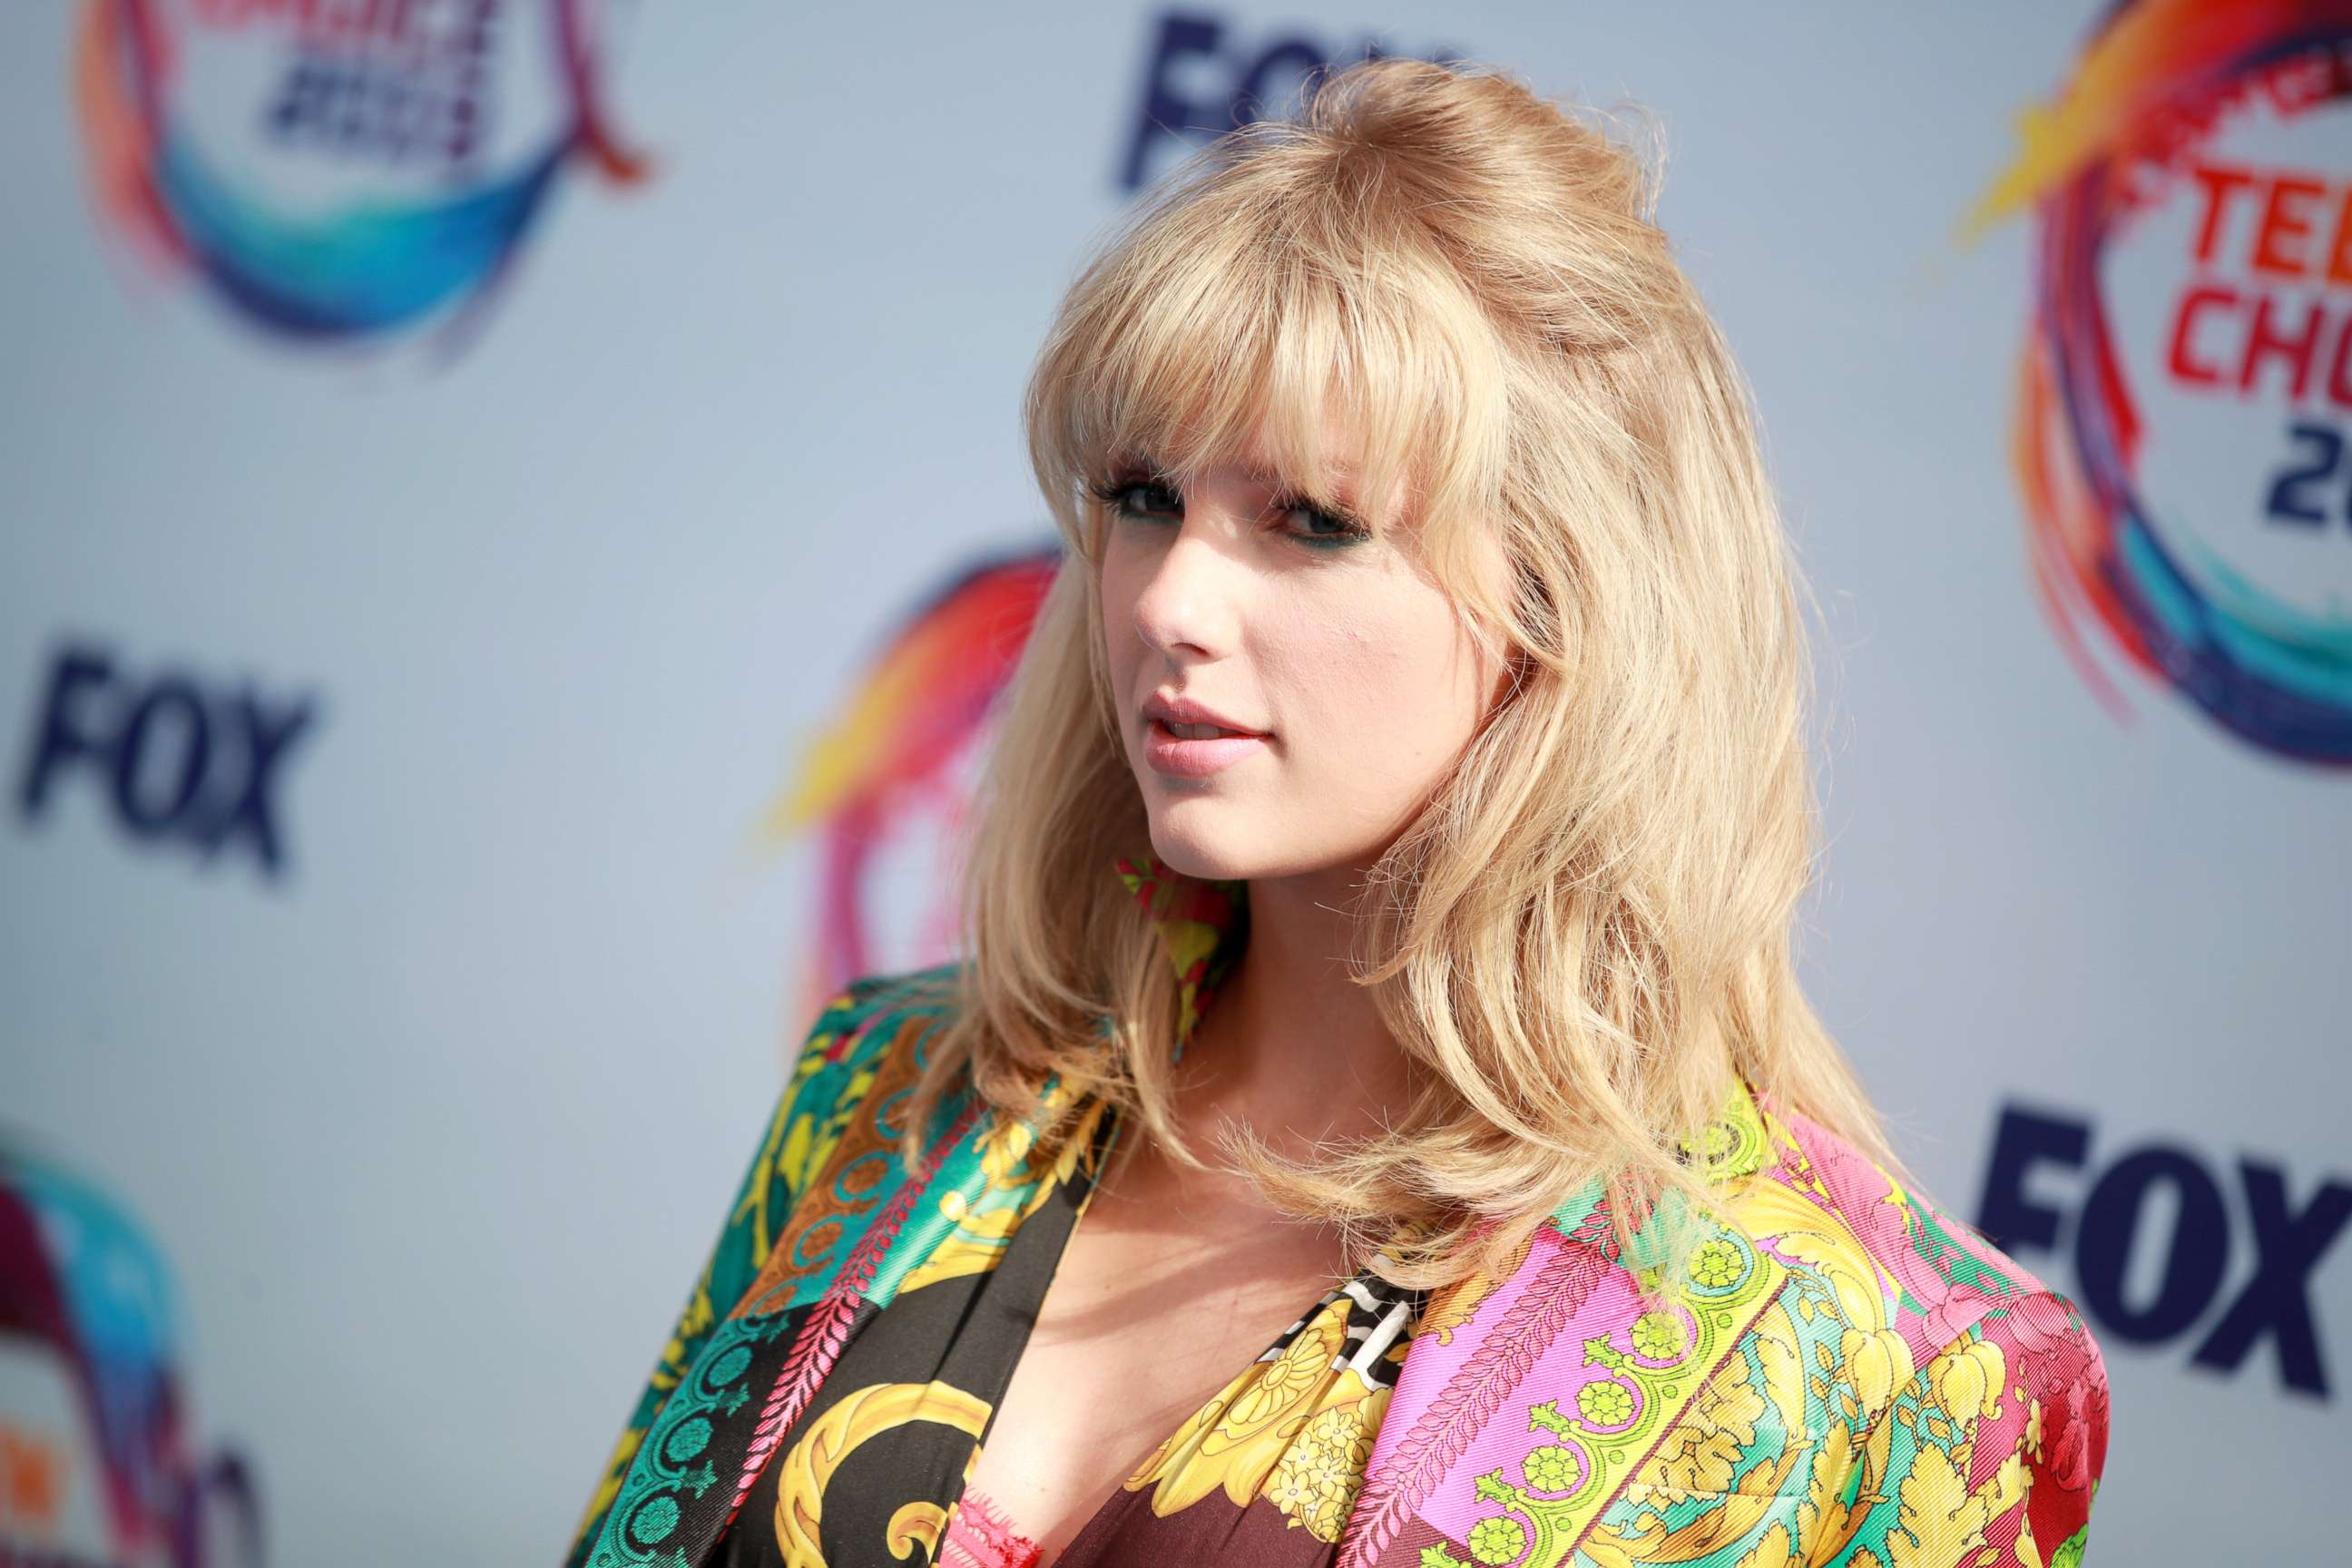 PHOTO: Taylor Swift attends FOX's Teen Choice Awards 2019 on Sunday, Aug. 11, 2019 in Hermosa Beach, California.